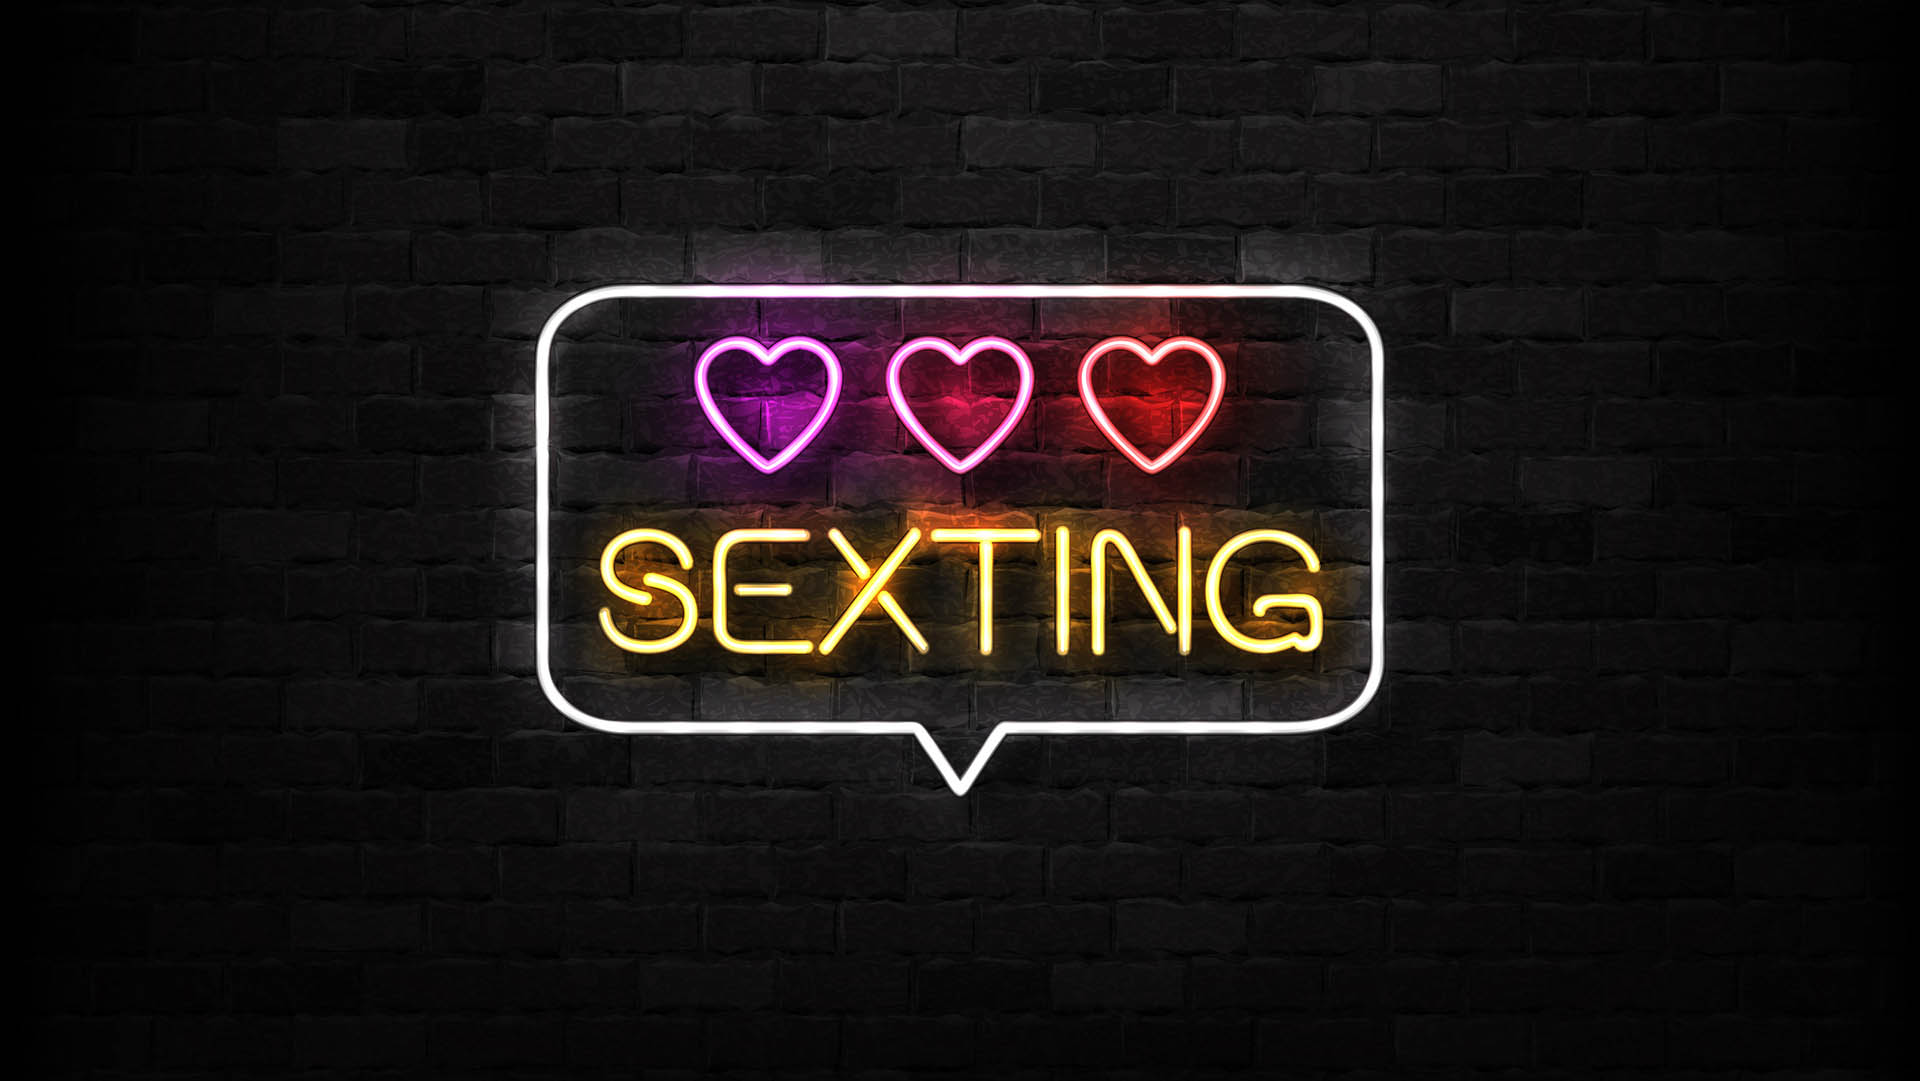 Sexting